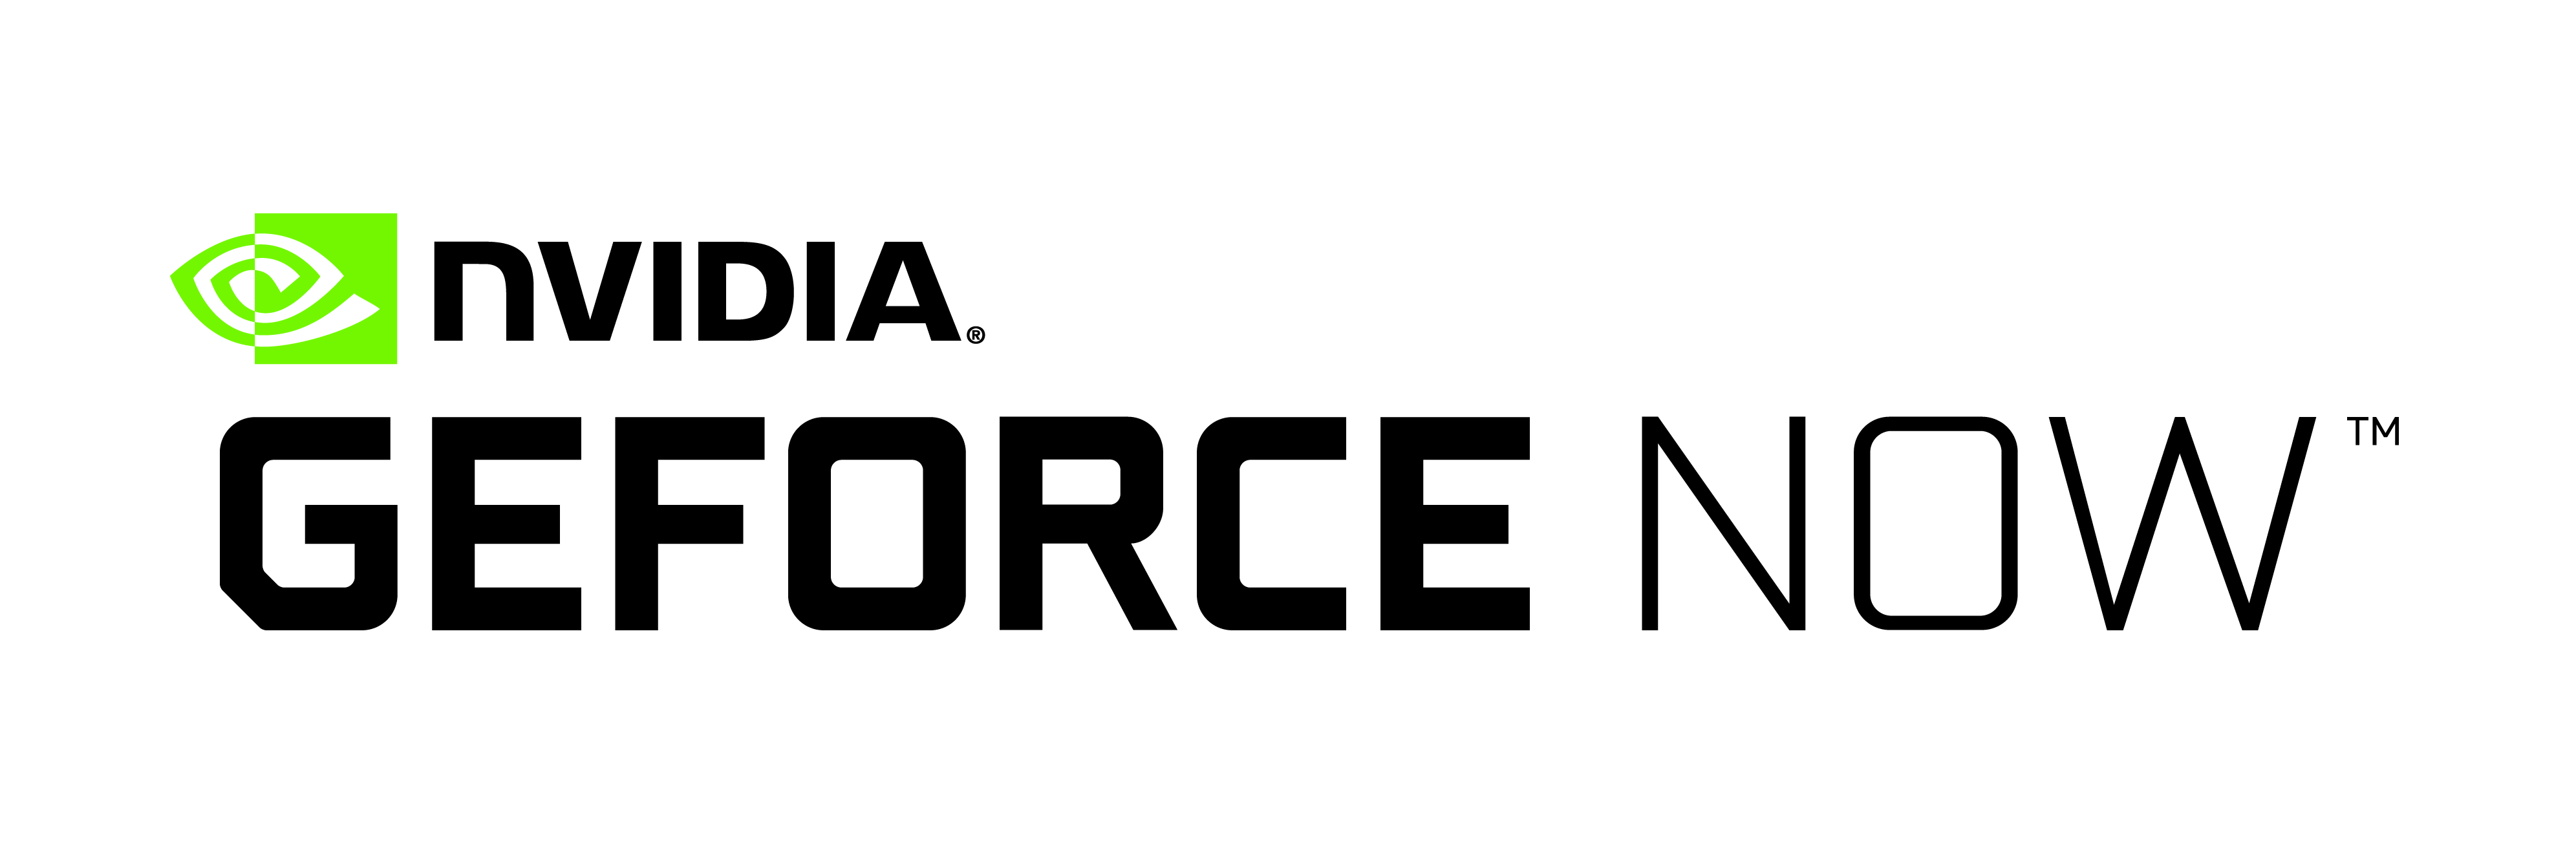 nvidia geforce logo png